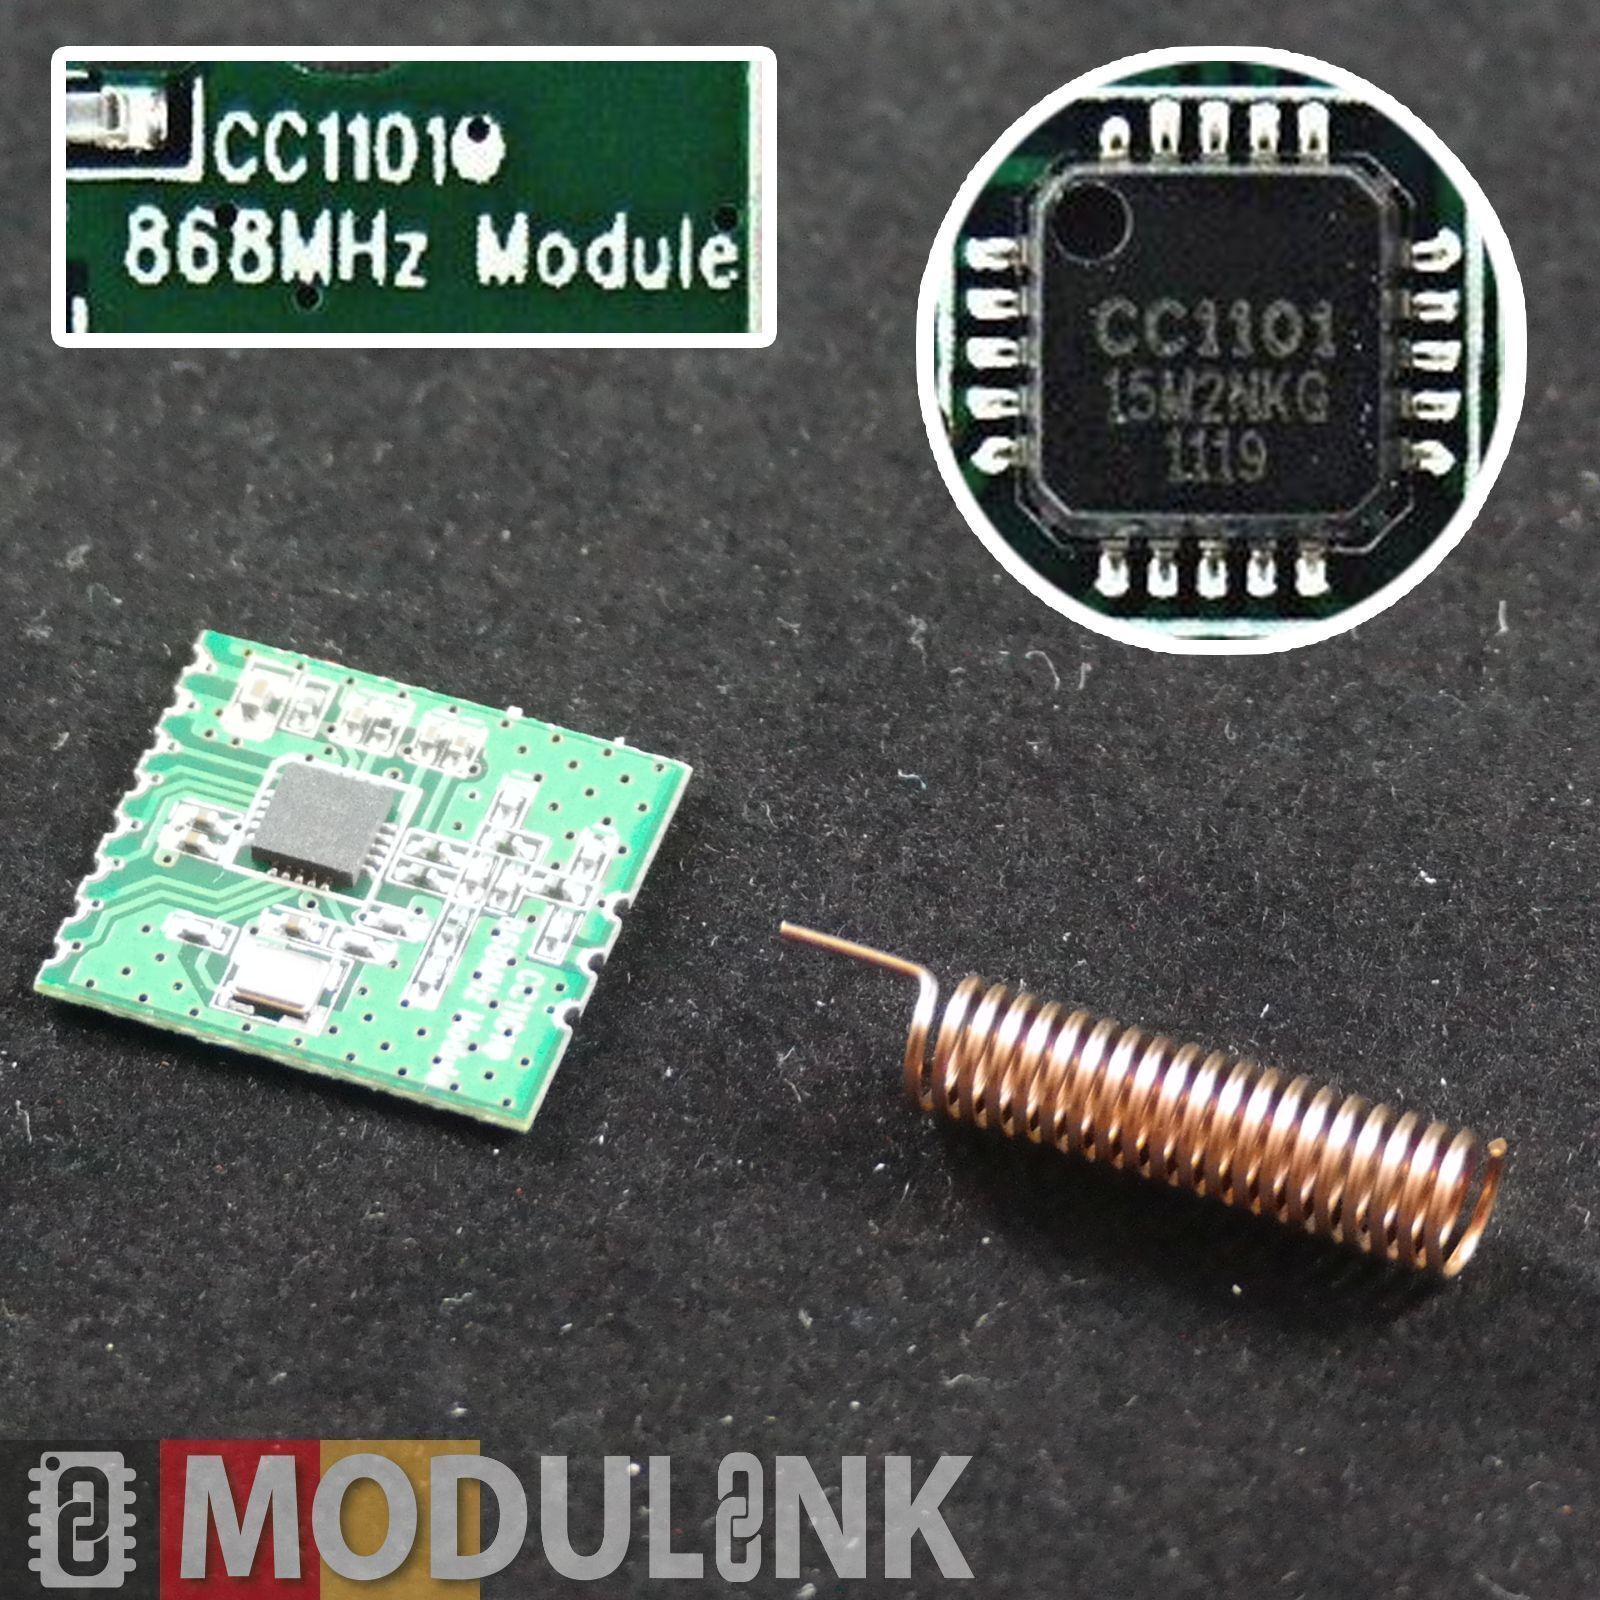 868 Mhz Funk Modul CC1101 FHEM Selbstbau CUL Wireless Transceiver Arduino RPi